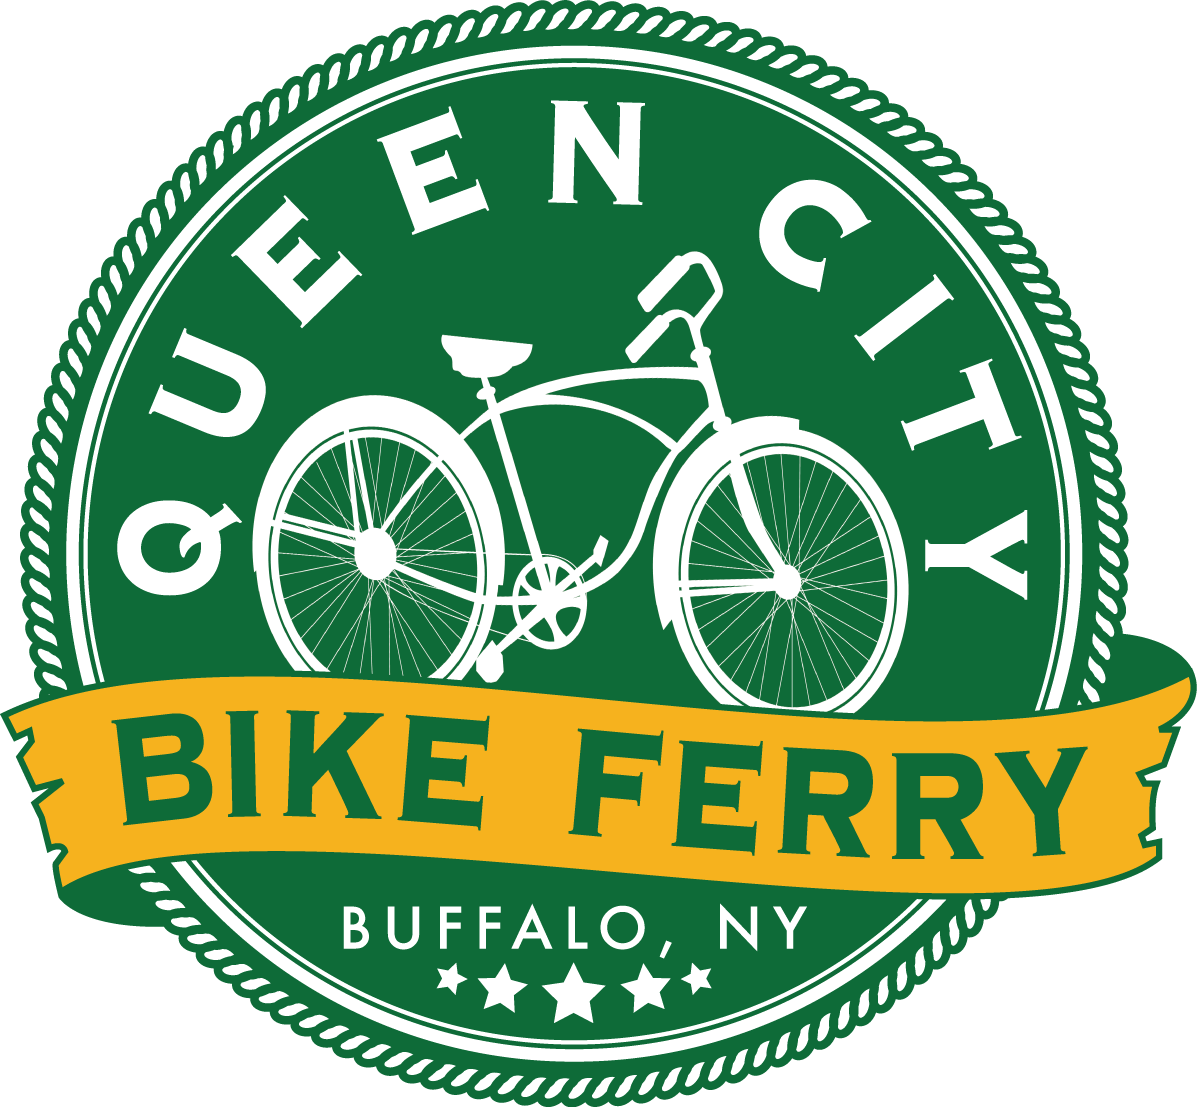 Queen City Bike Ferry